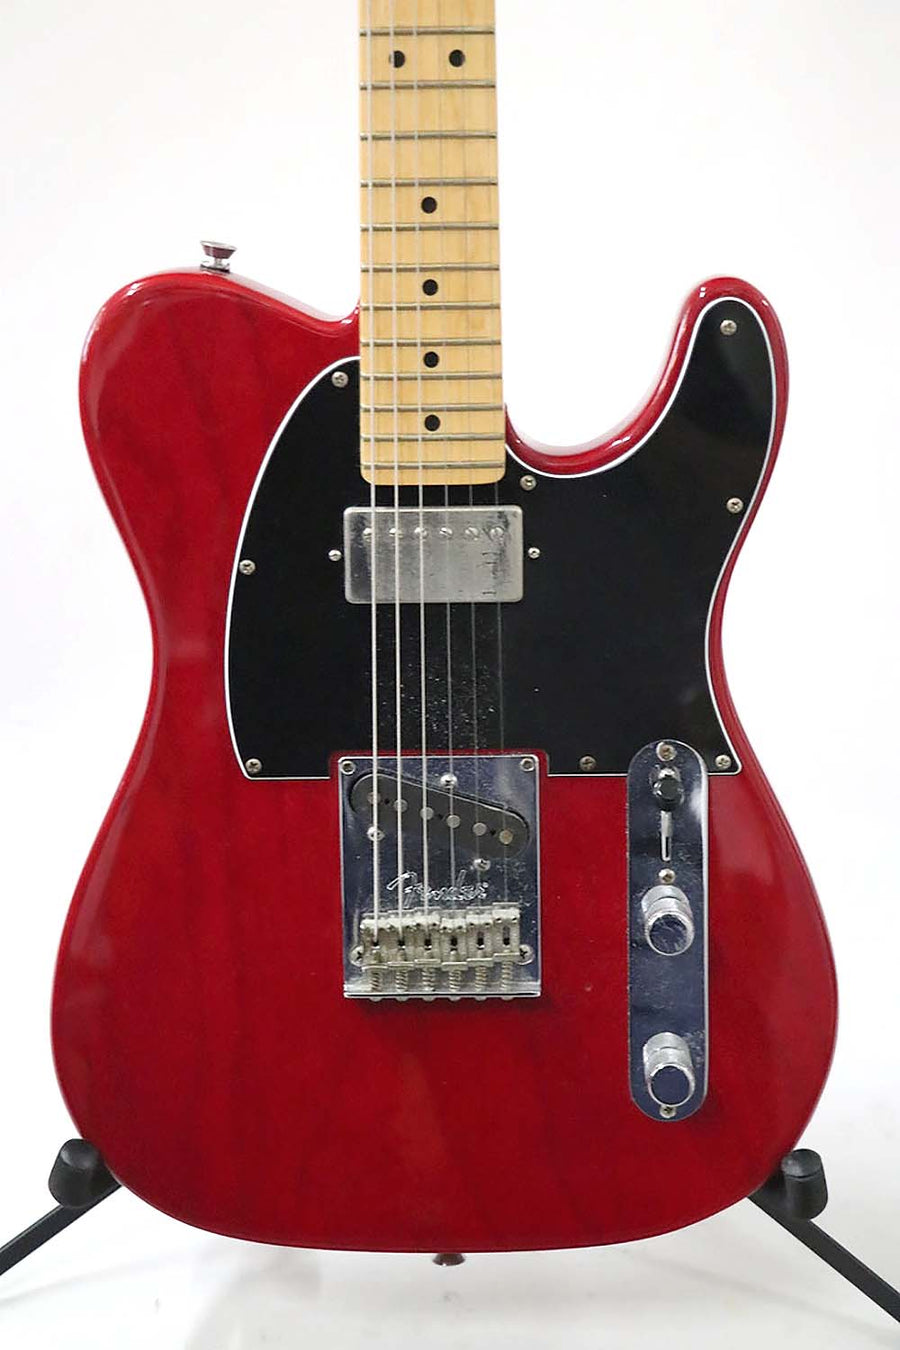 Fender American Standard Tele with Brierley PAF